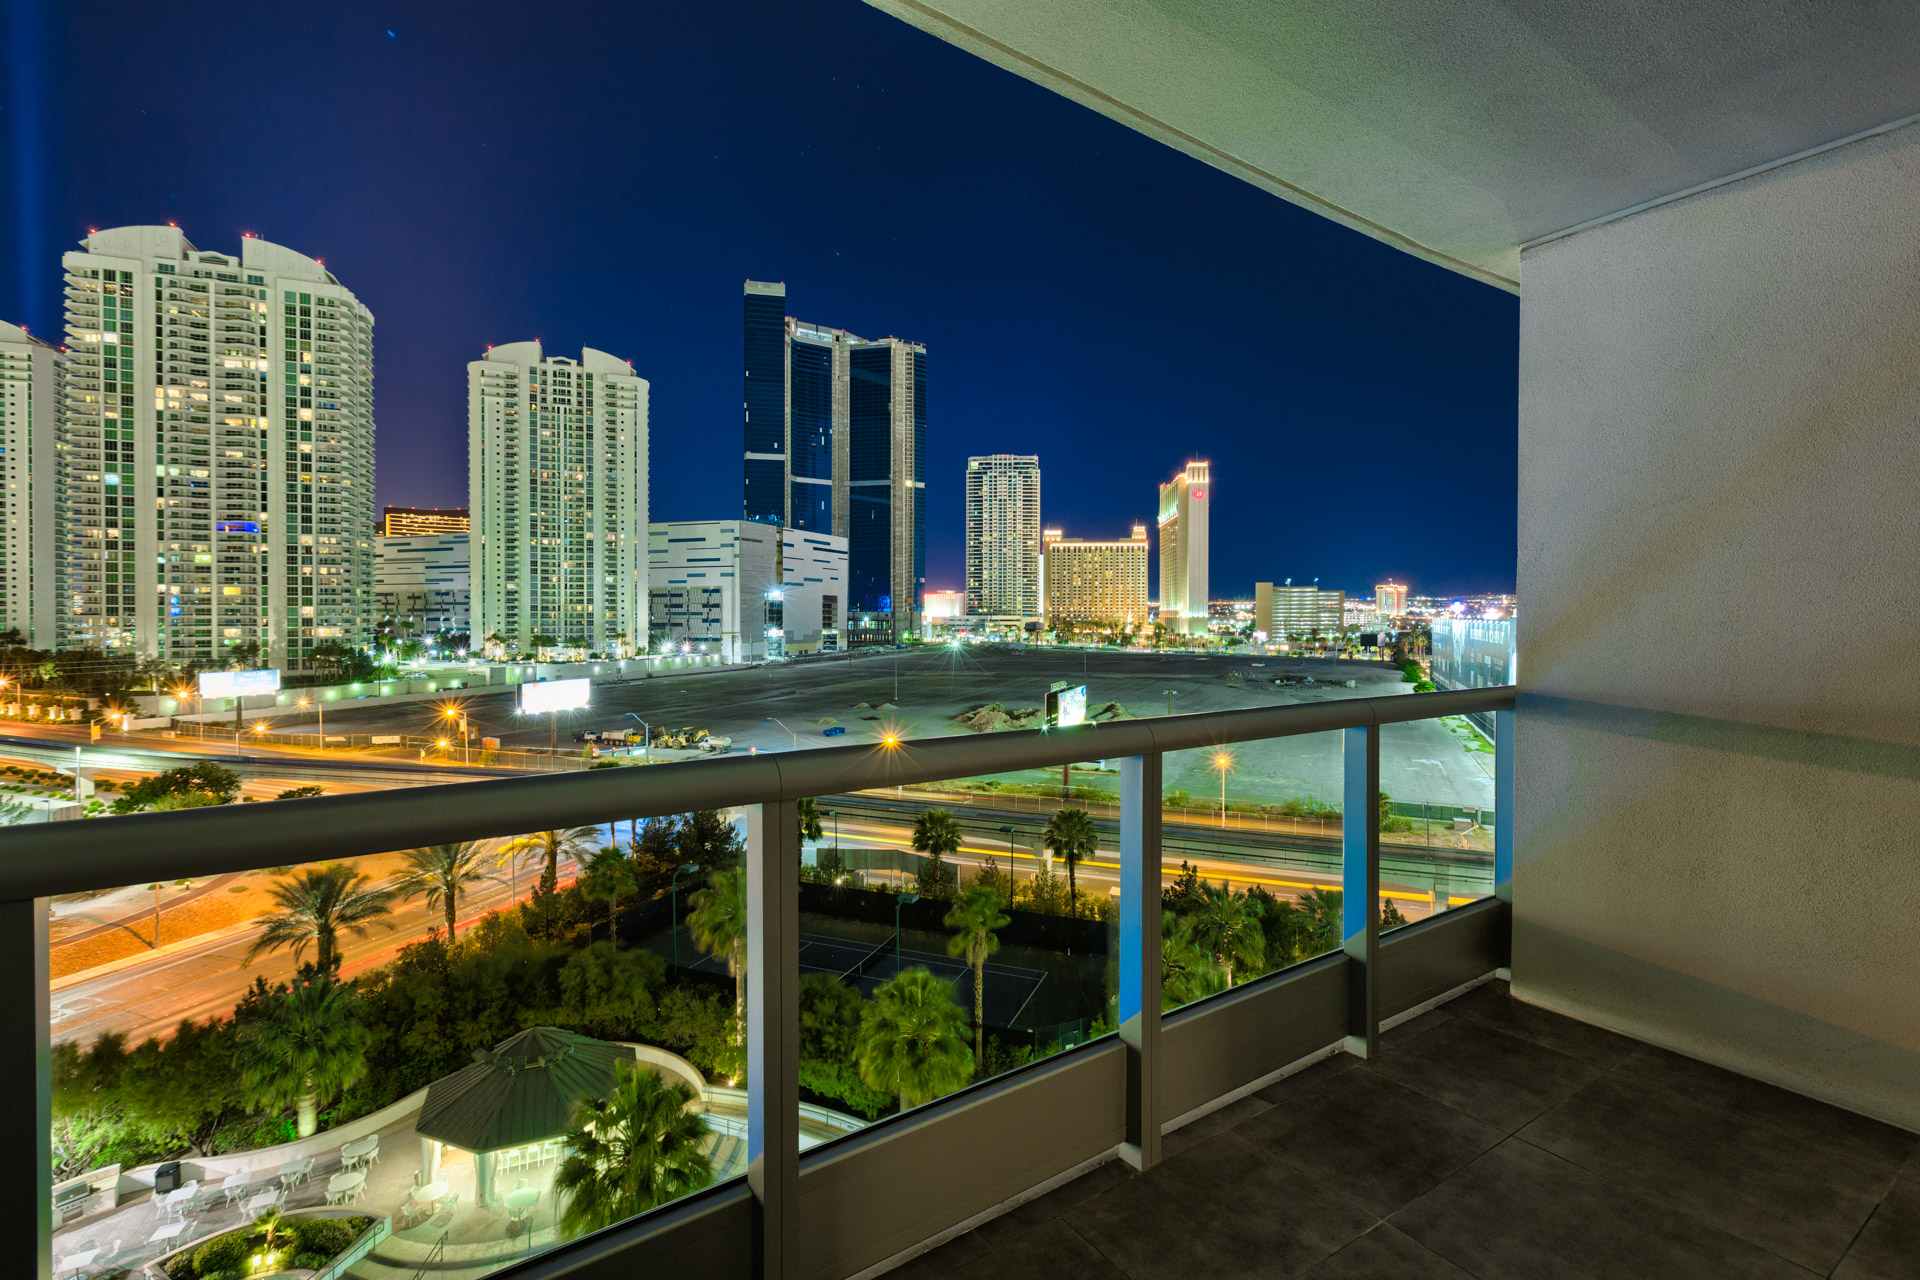 10 Best Condos In Las Vegas 2023 - Buyer's Guide